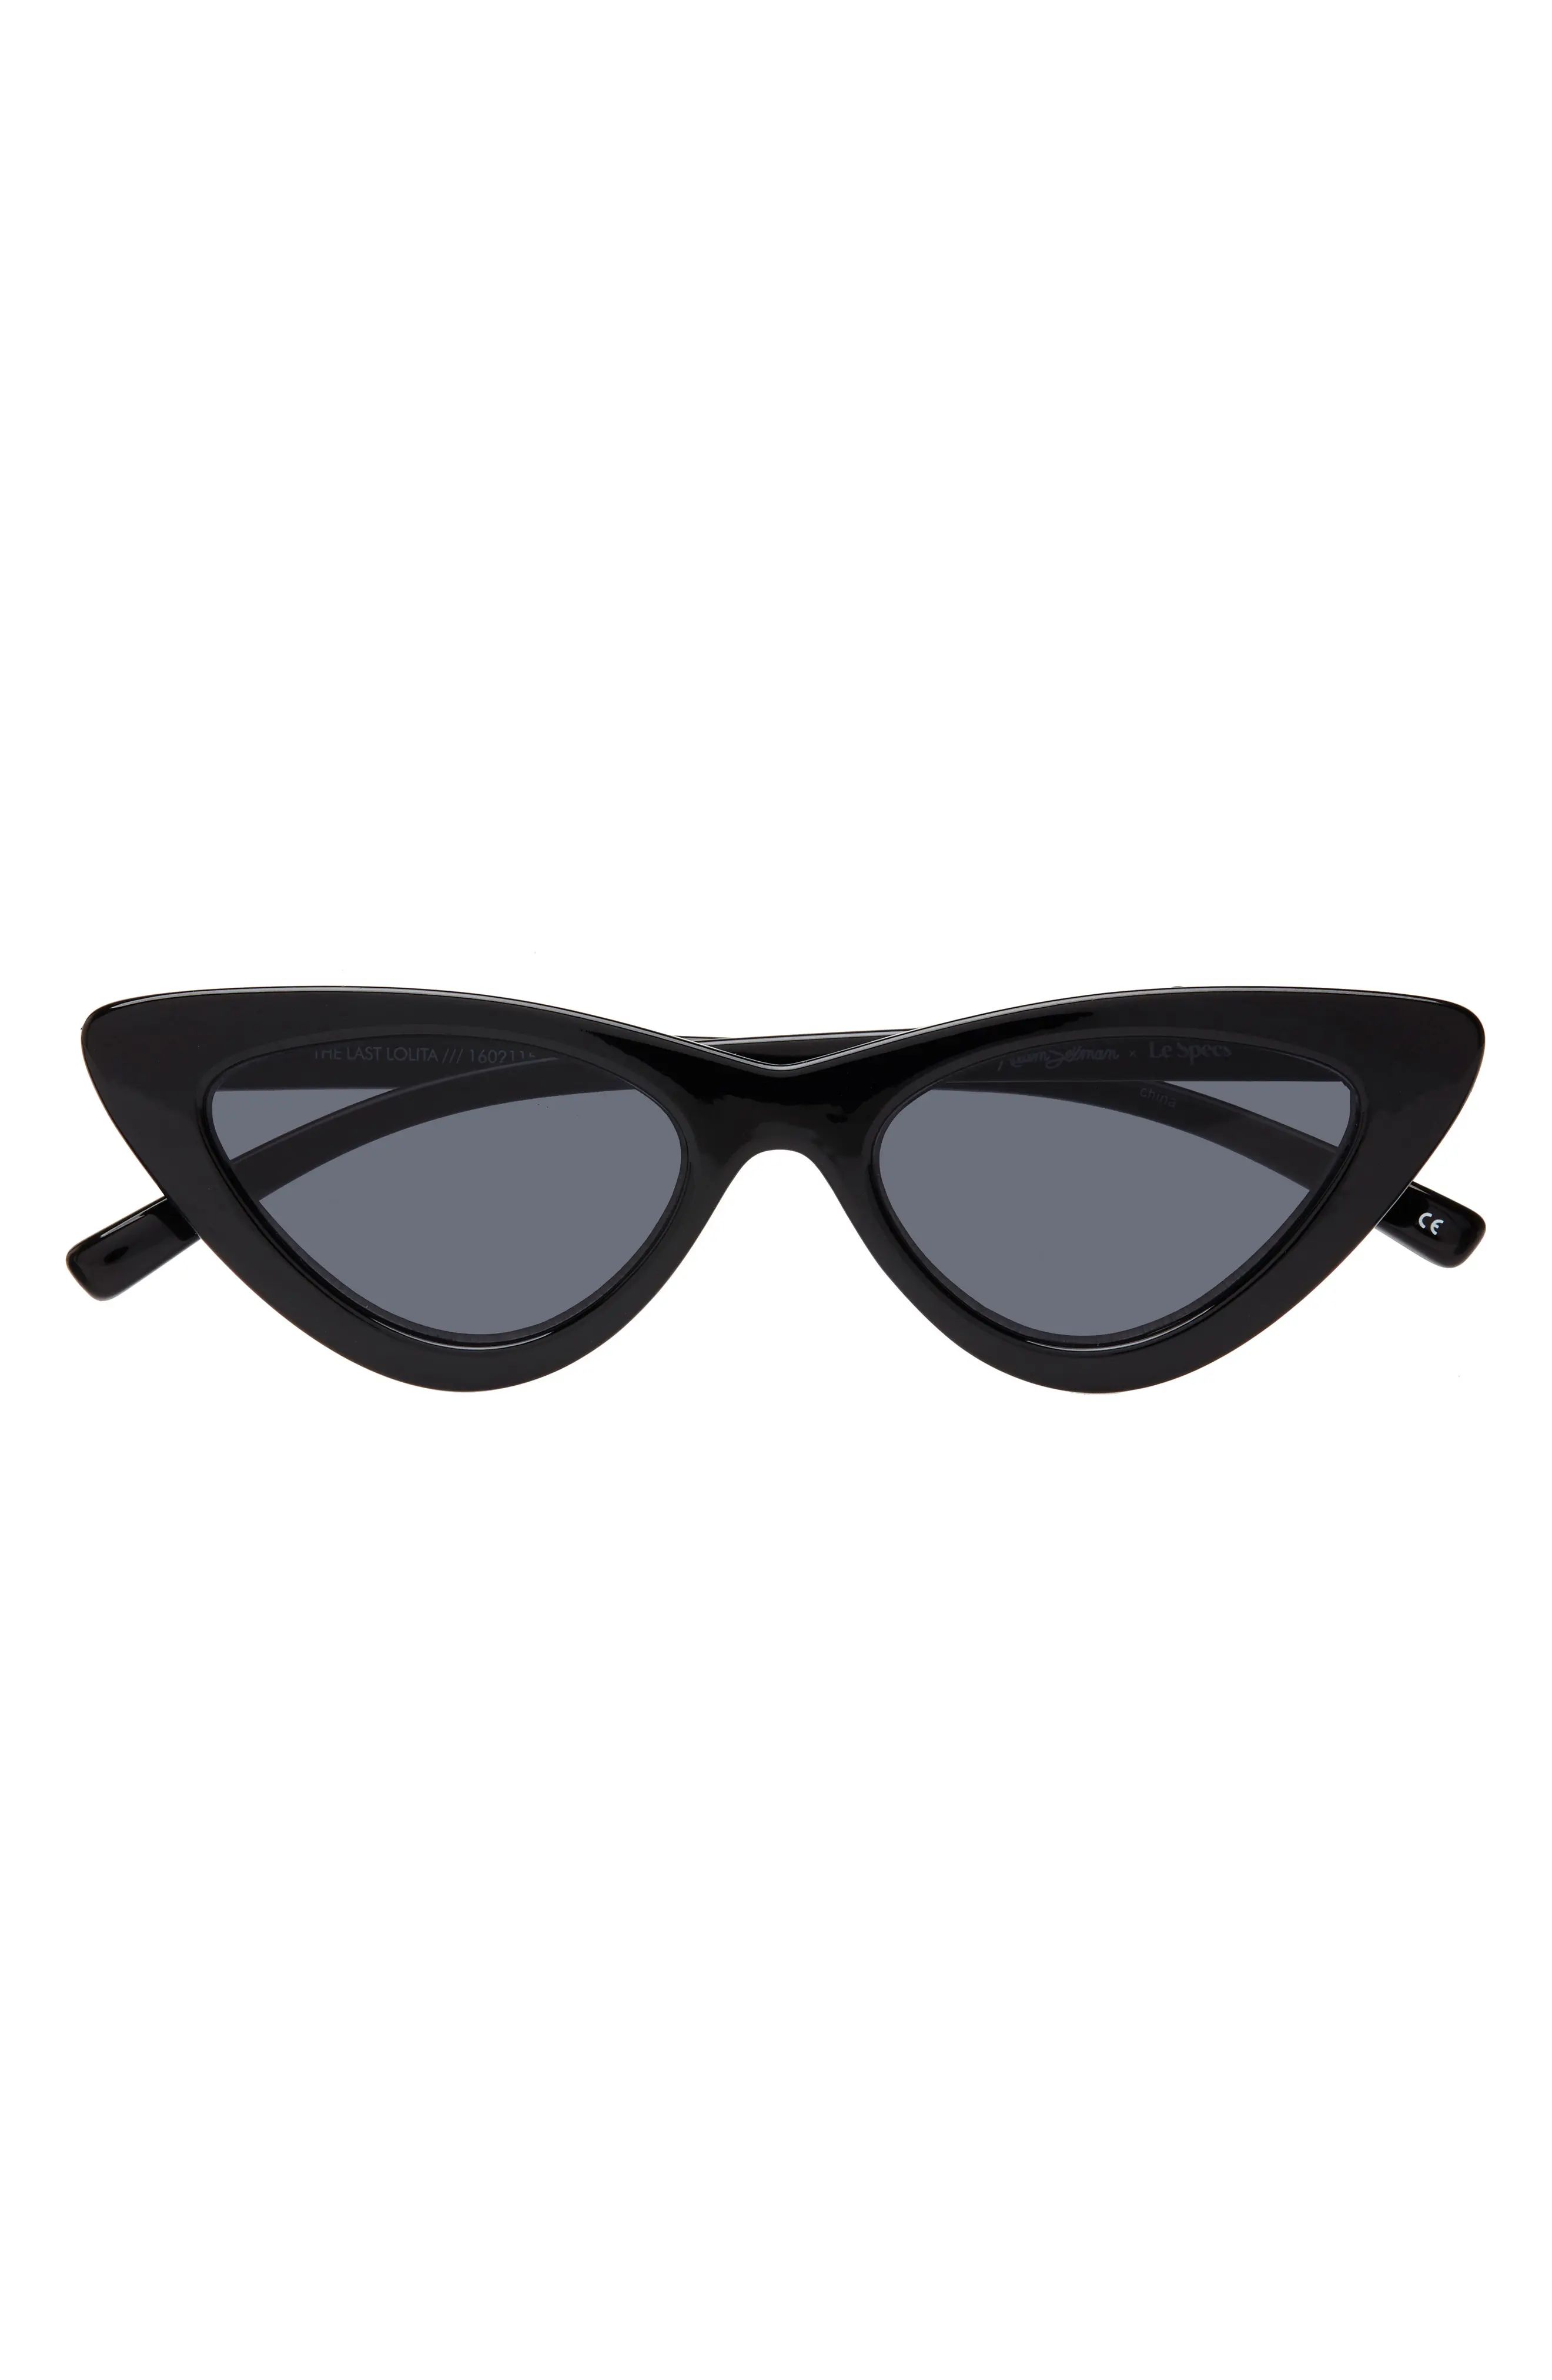 Adam Selman x Le Specs Luxe Lolita 49mm Cat Eye Sunglasses | Nordstrom